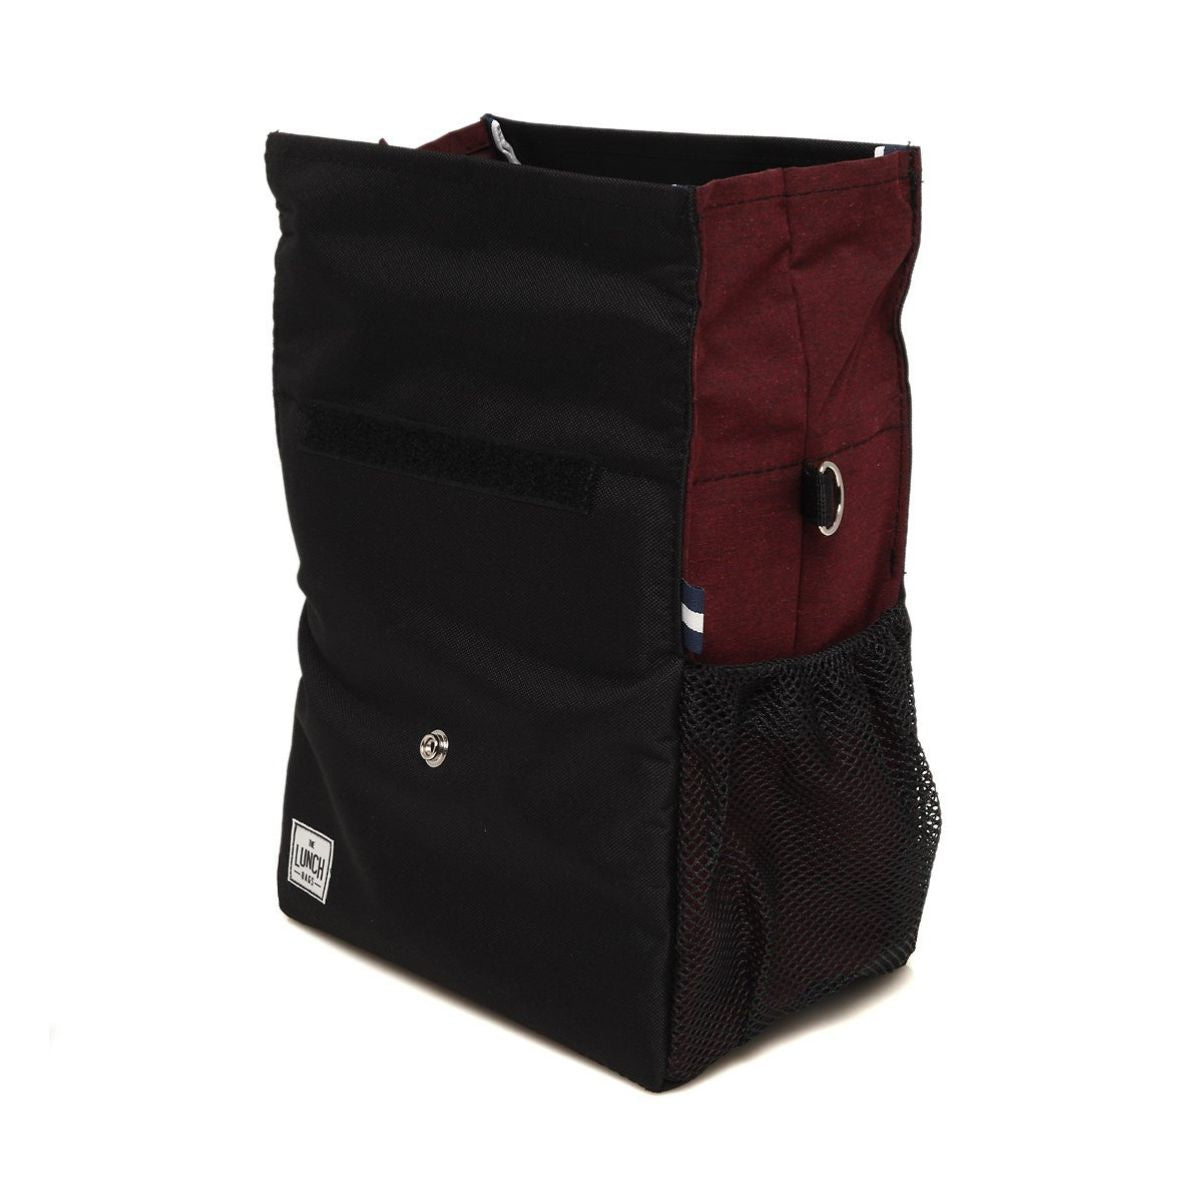 The Lunch Bags Original 2 Ισοθερμική Τσάντα Dark Red - 5lt